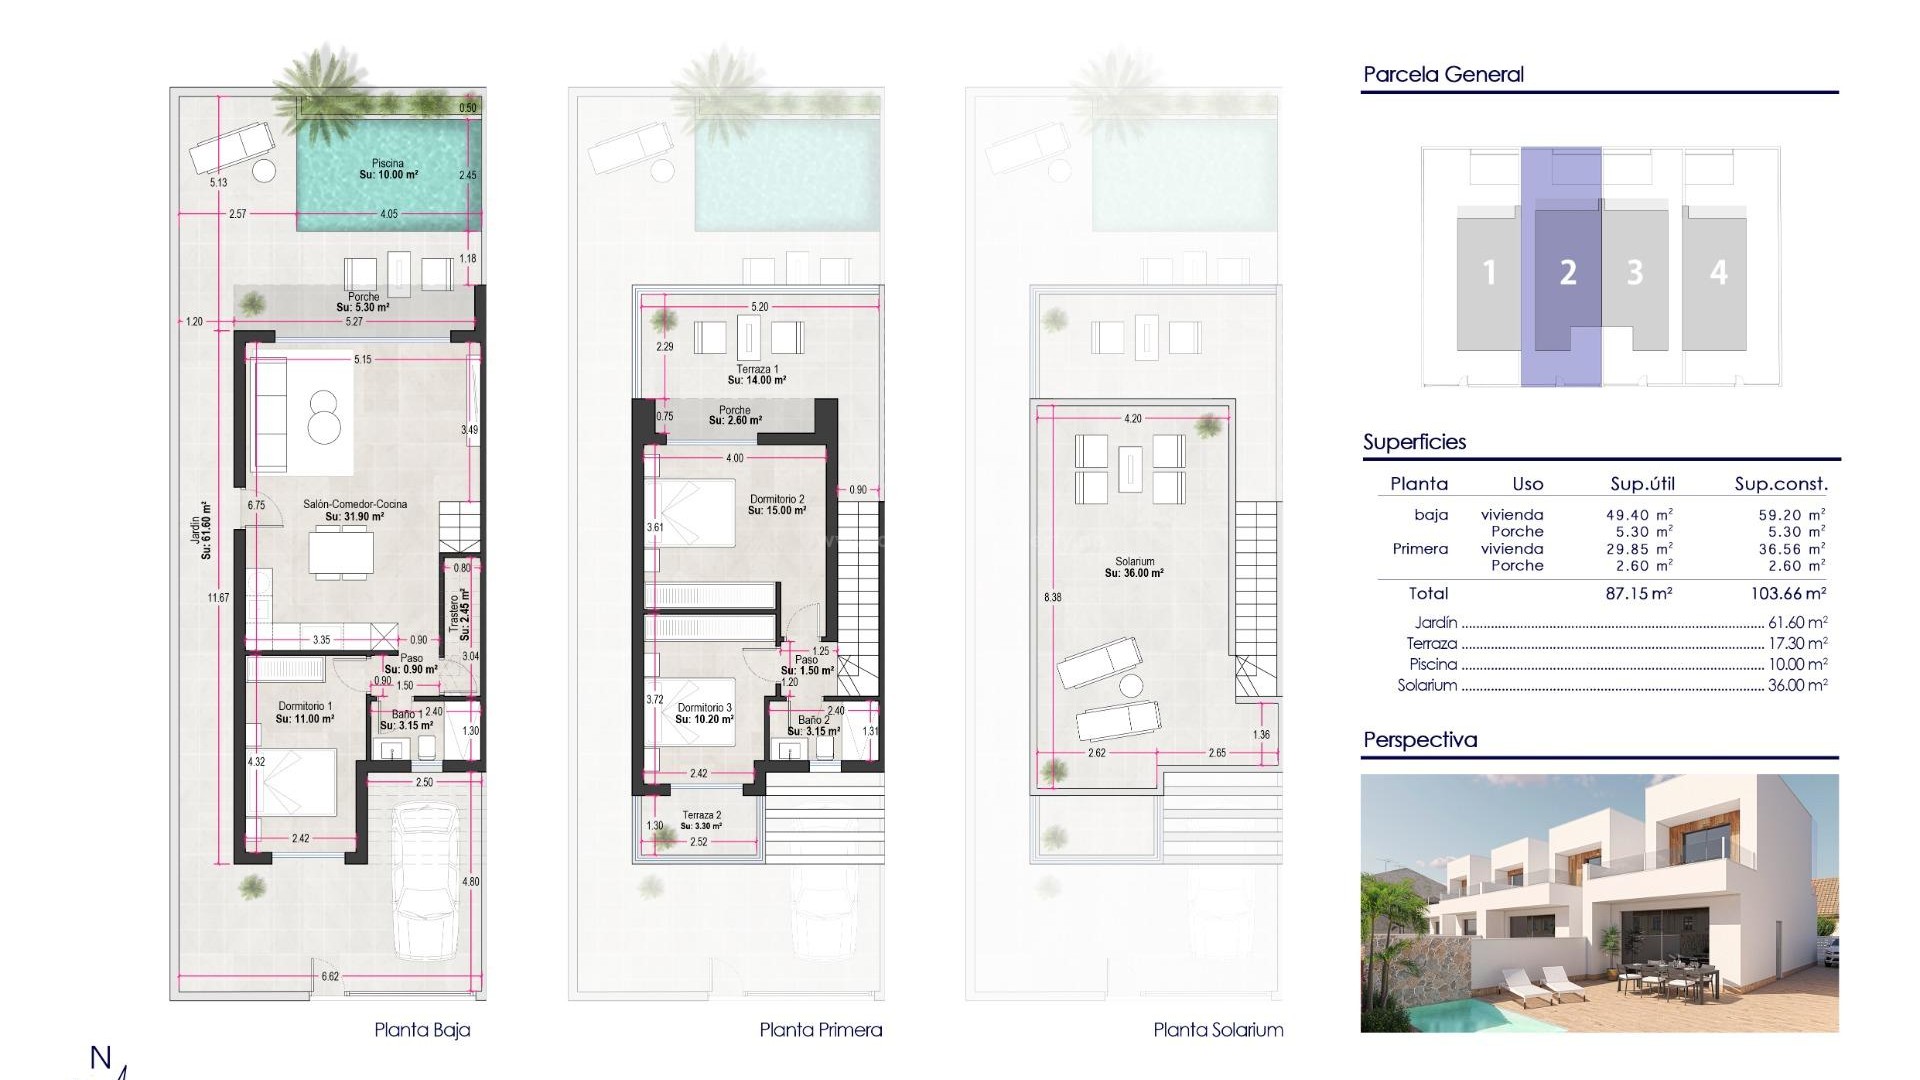 New semi-detached houses in El Mojon, Pilar de la Horadada, 3 bedrooms, 2 bathrooms, private solarium, private garden with pool and parking